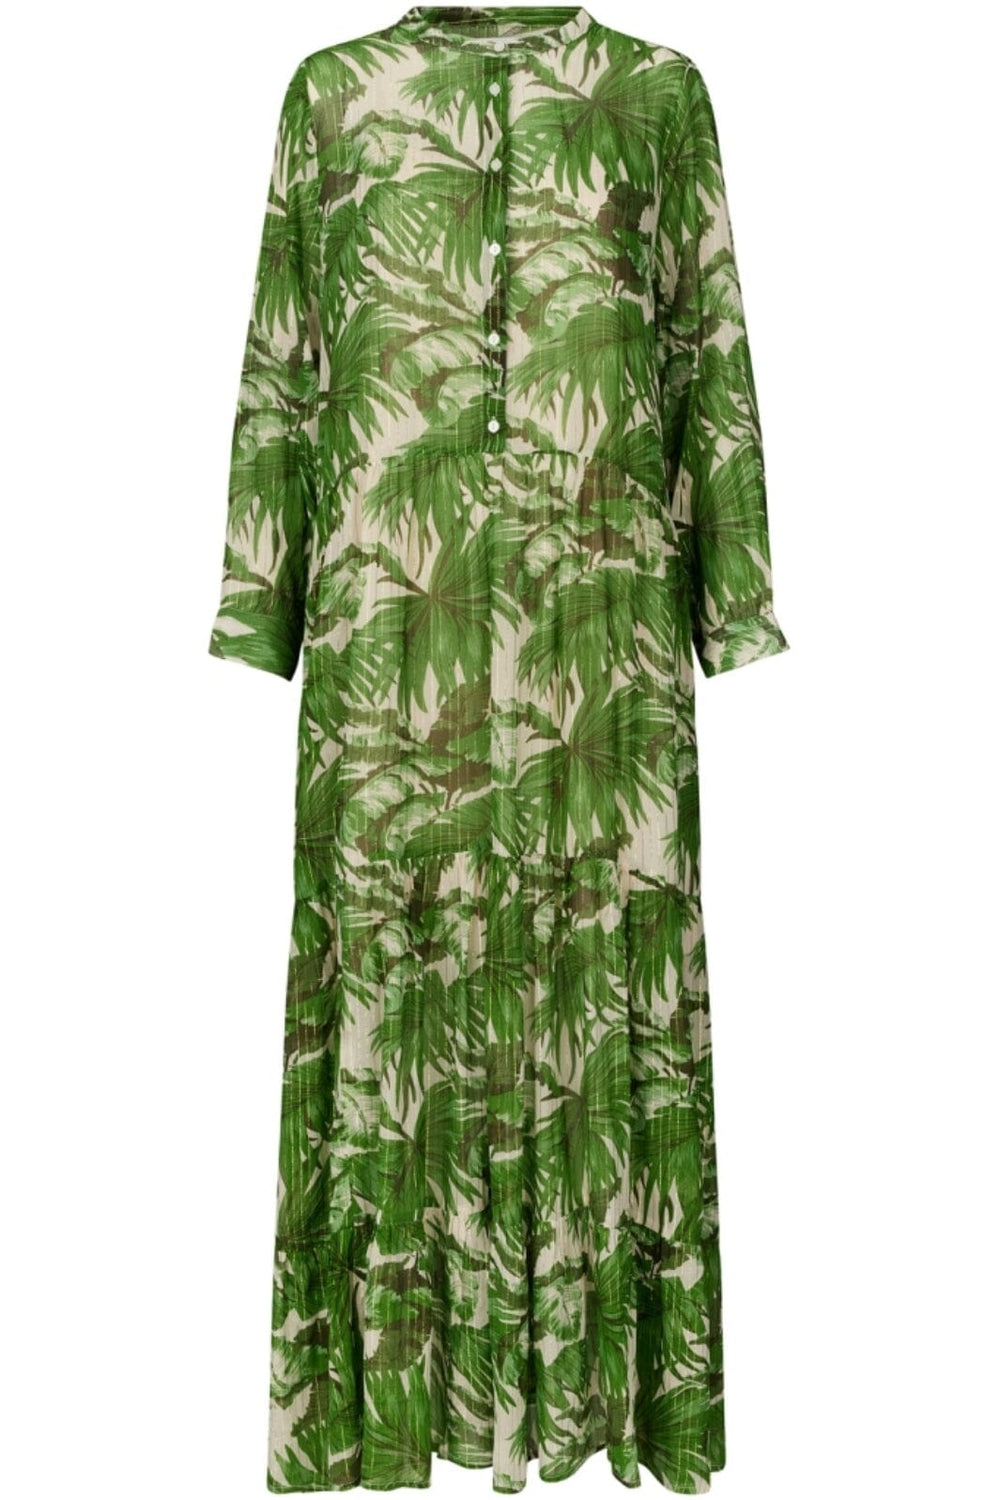 Lollys Laundry - NeeLL Maxi Dress LS - 40 Green Kjoler 